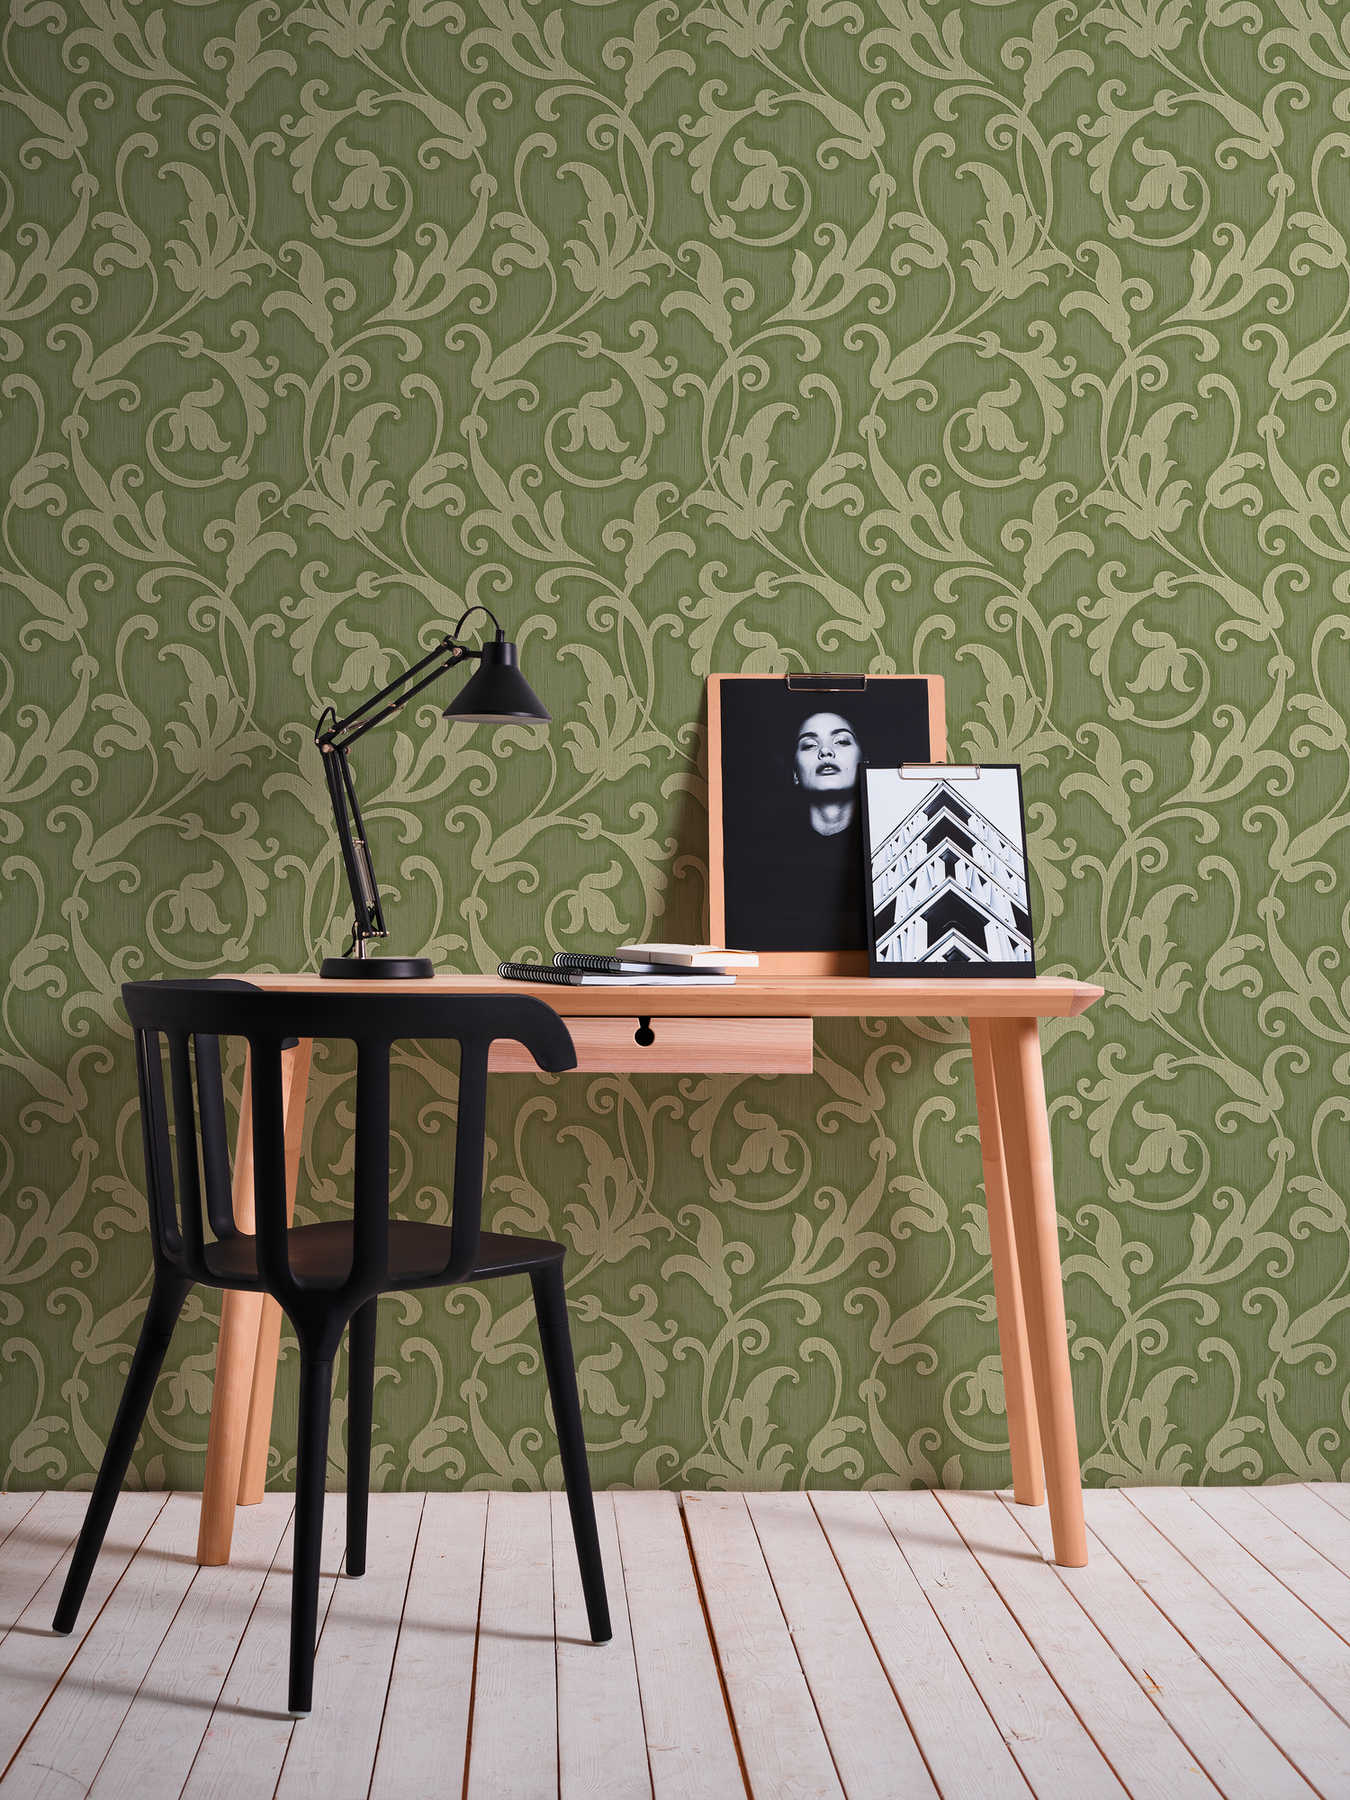             Non-woven wallpaper with 3D ornamental pattern & texture design - green, metallic
        